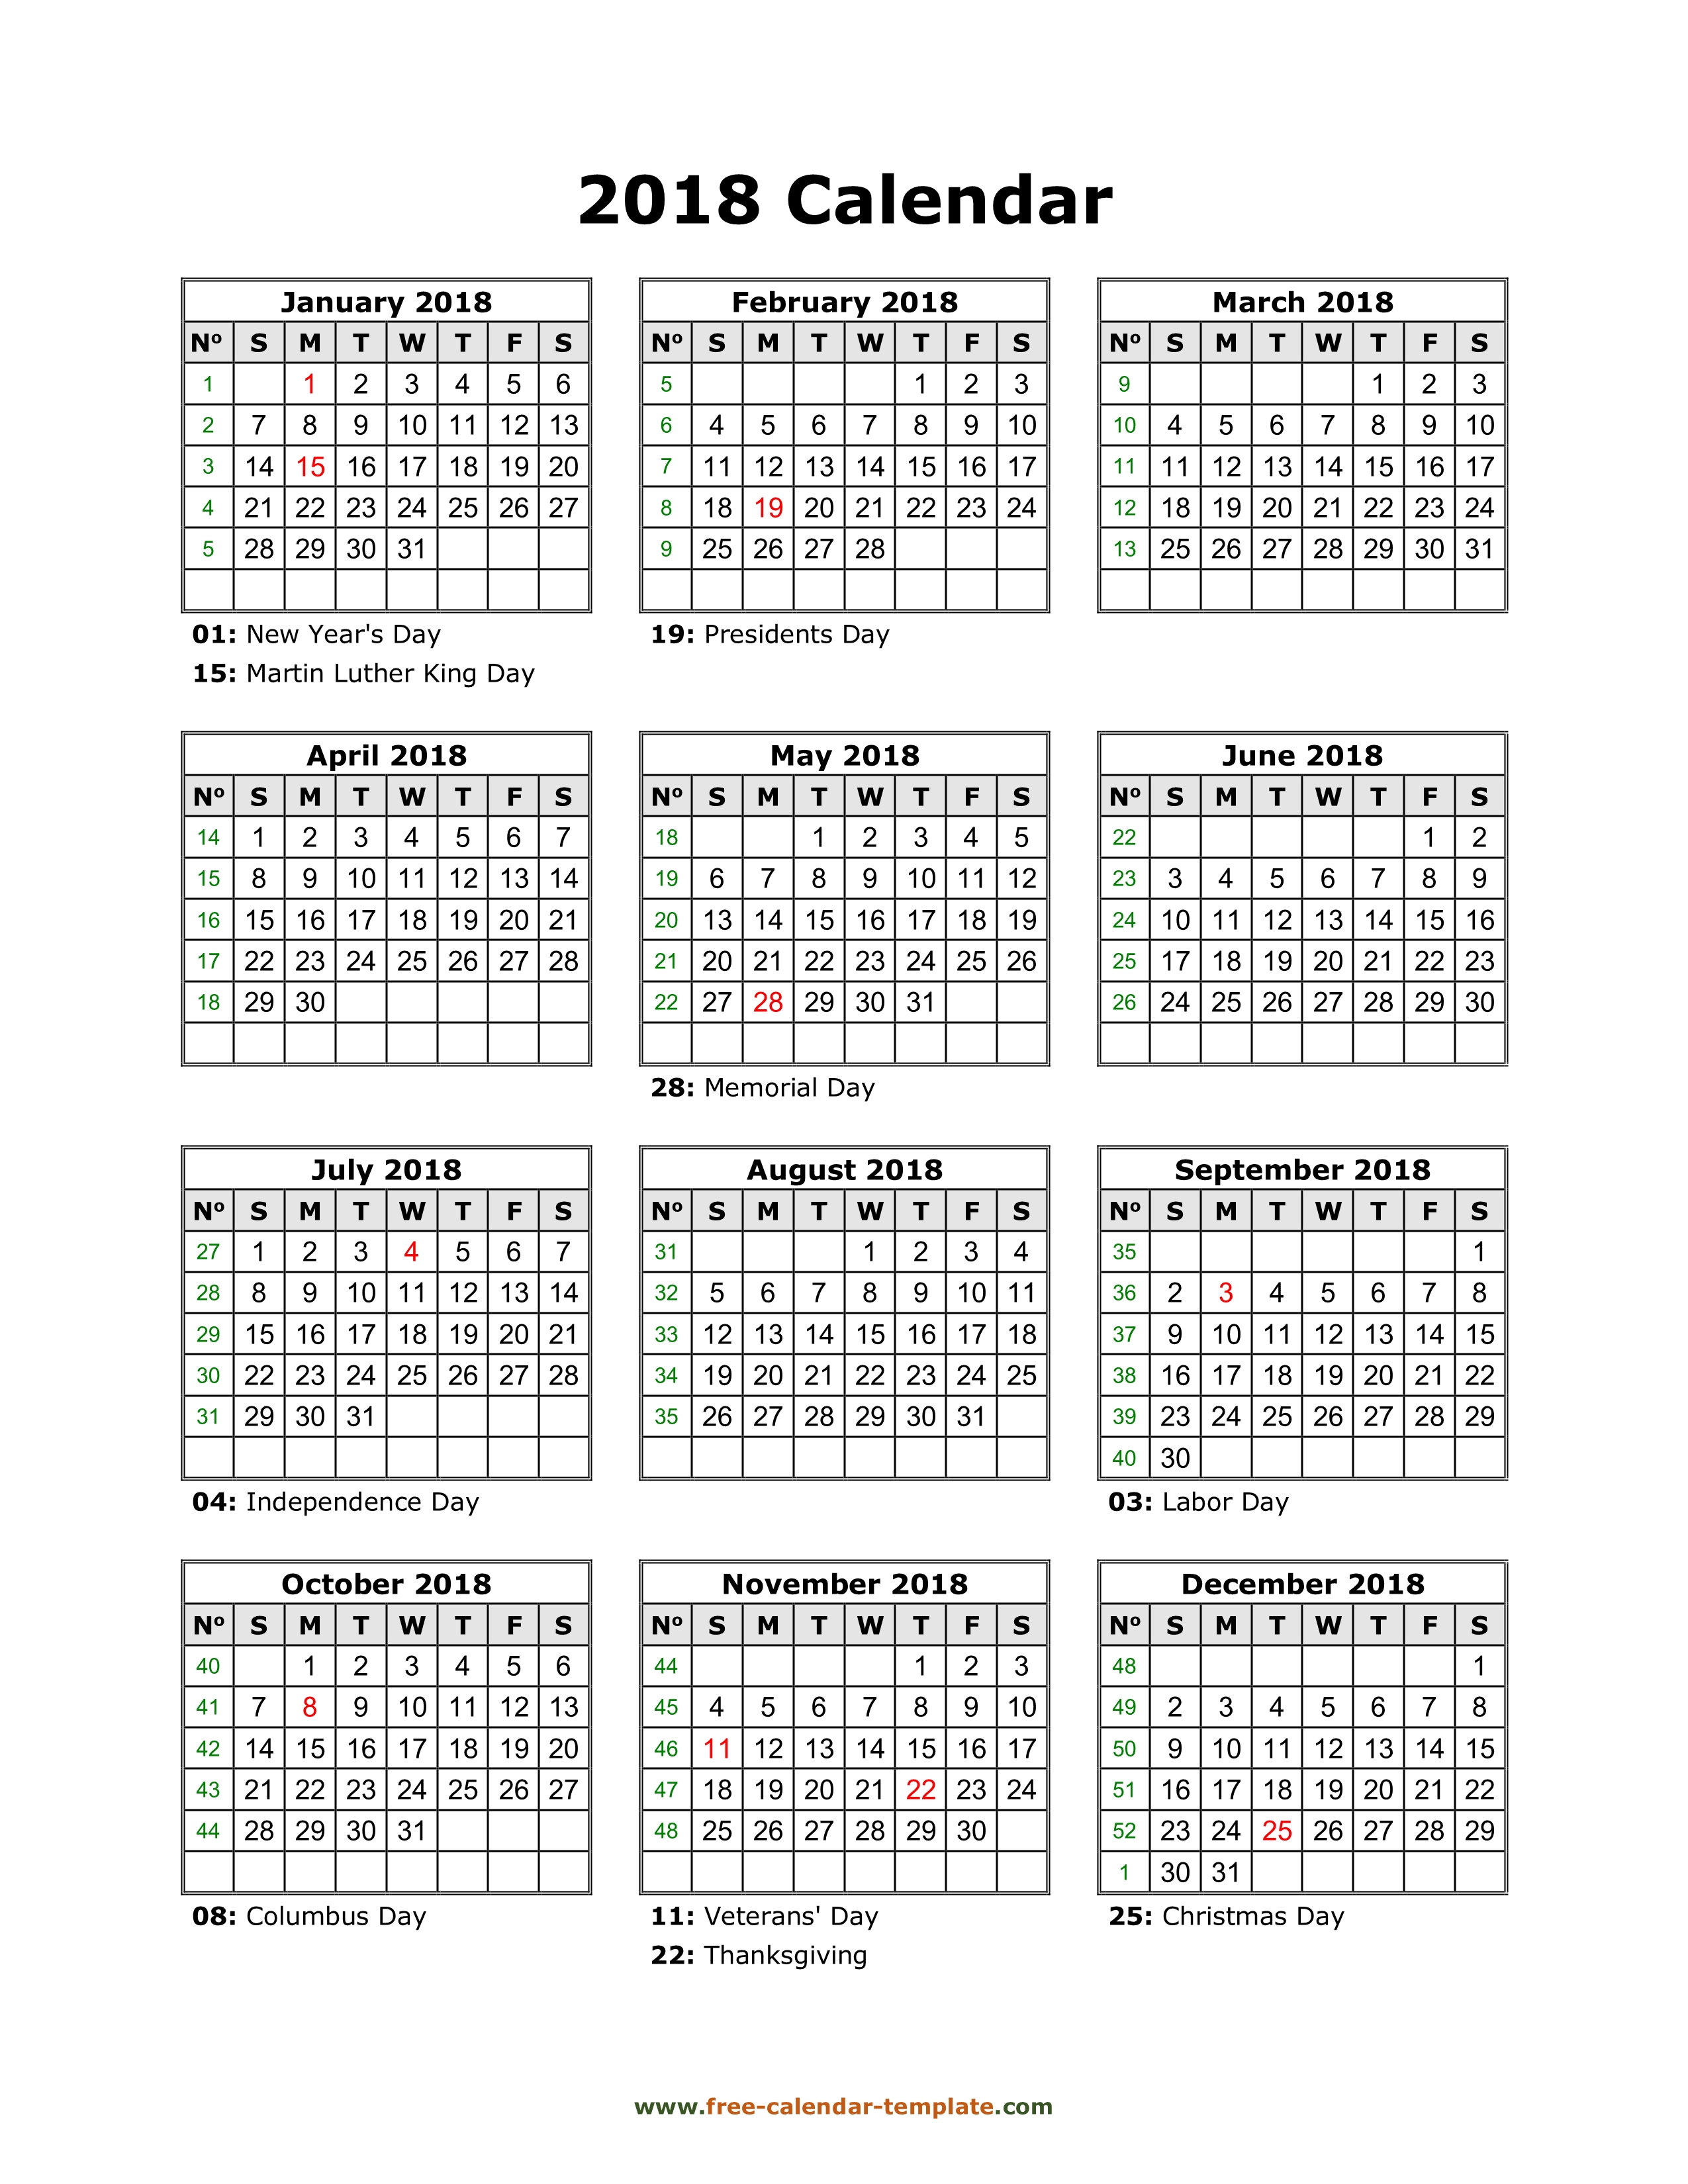 free-calendar-2018-printable-with-holidays-tjopm